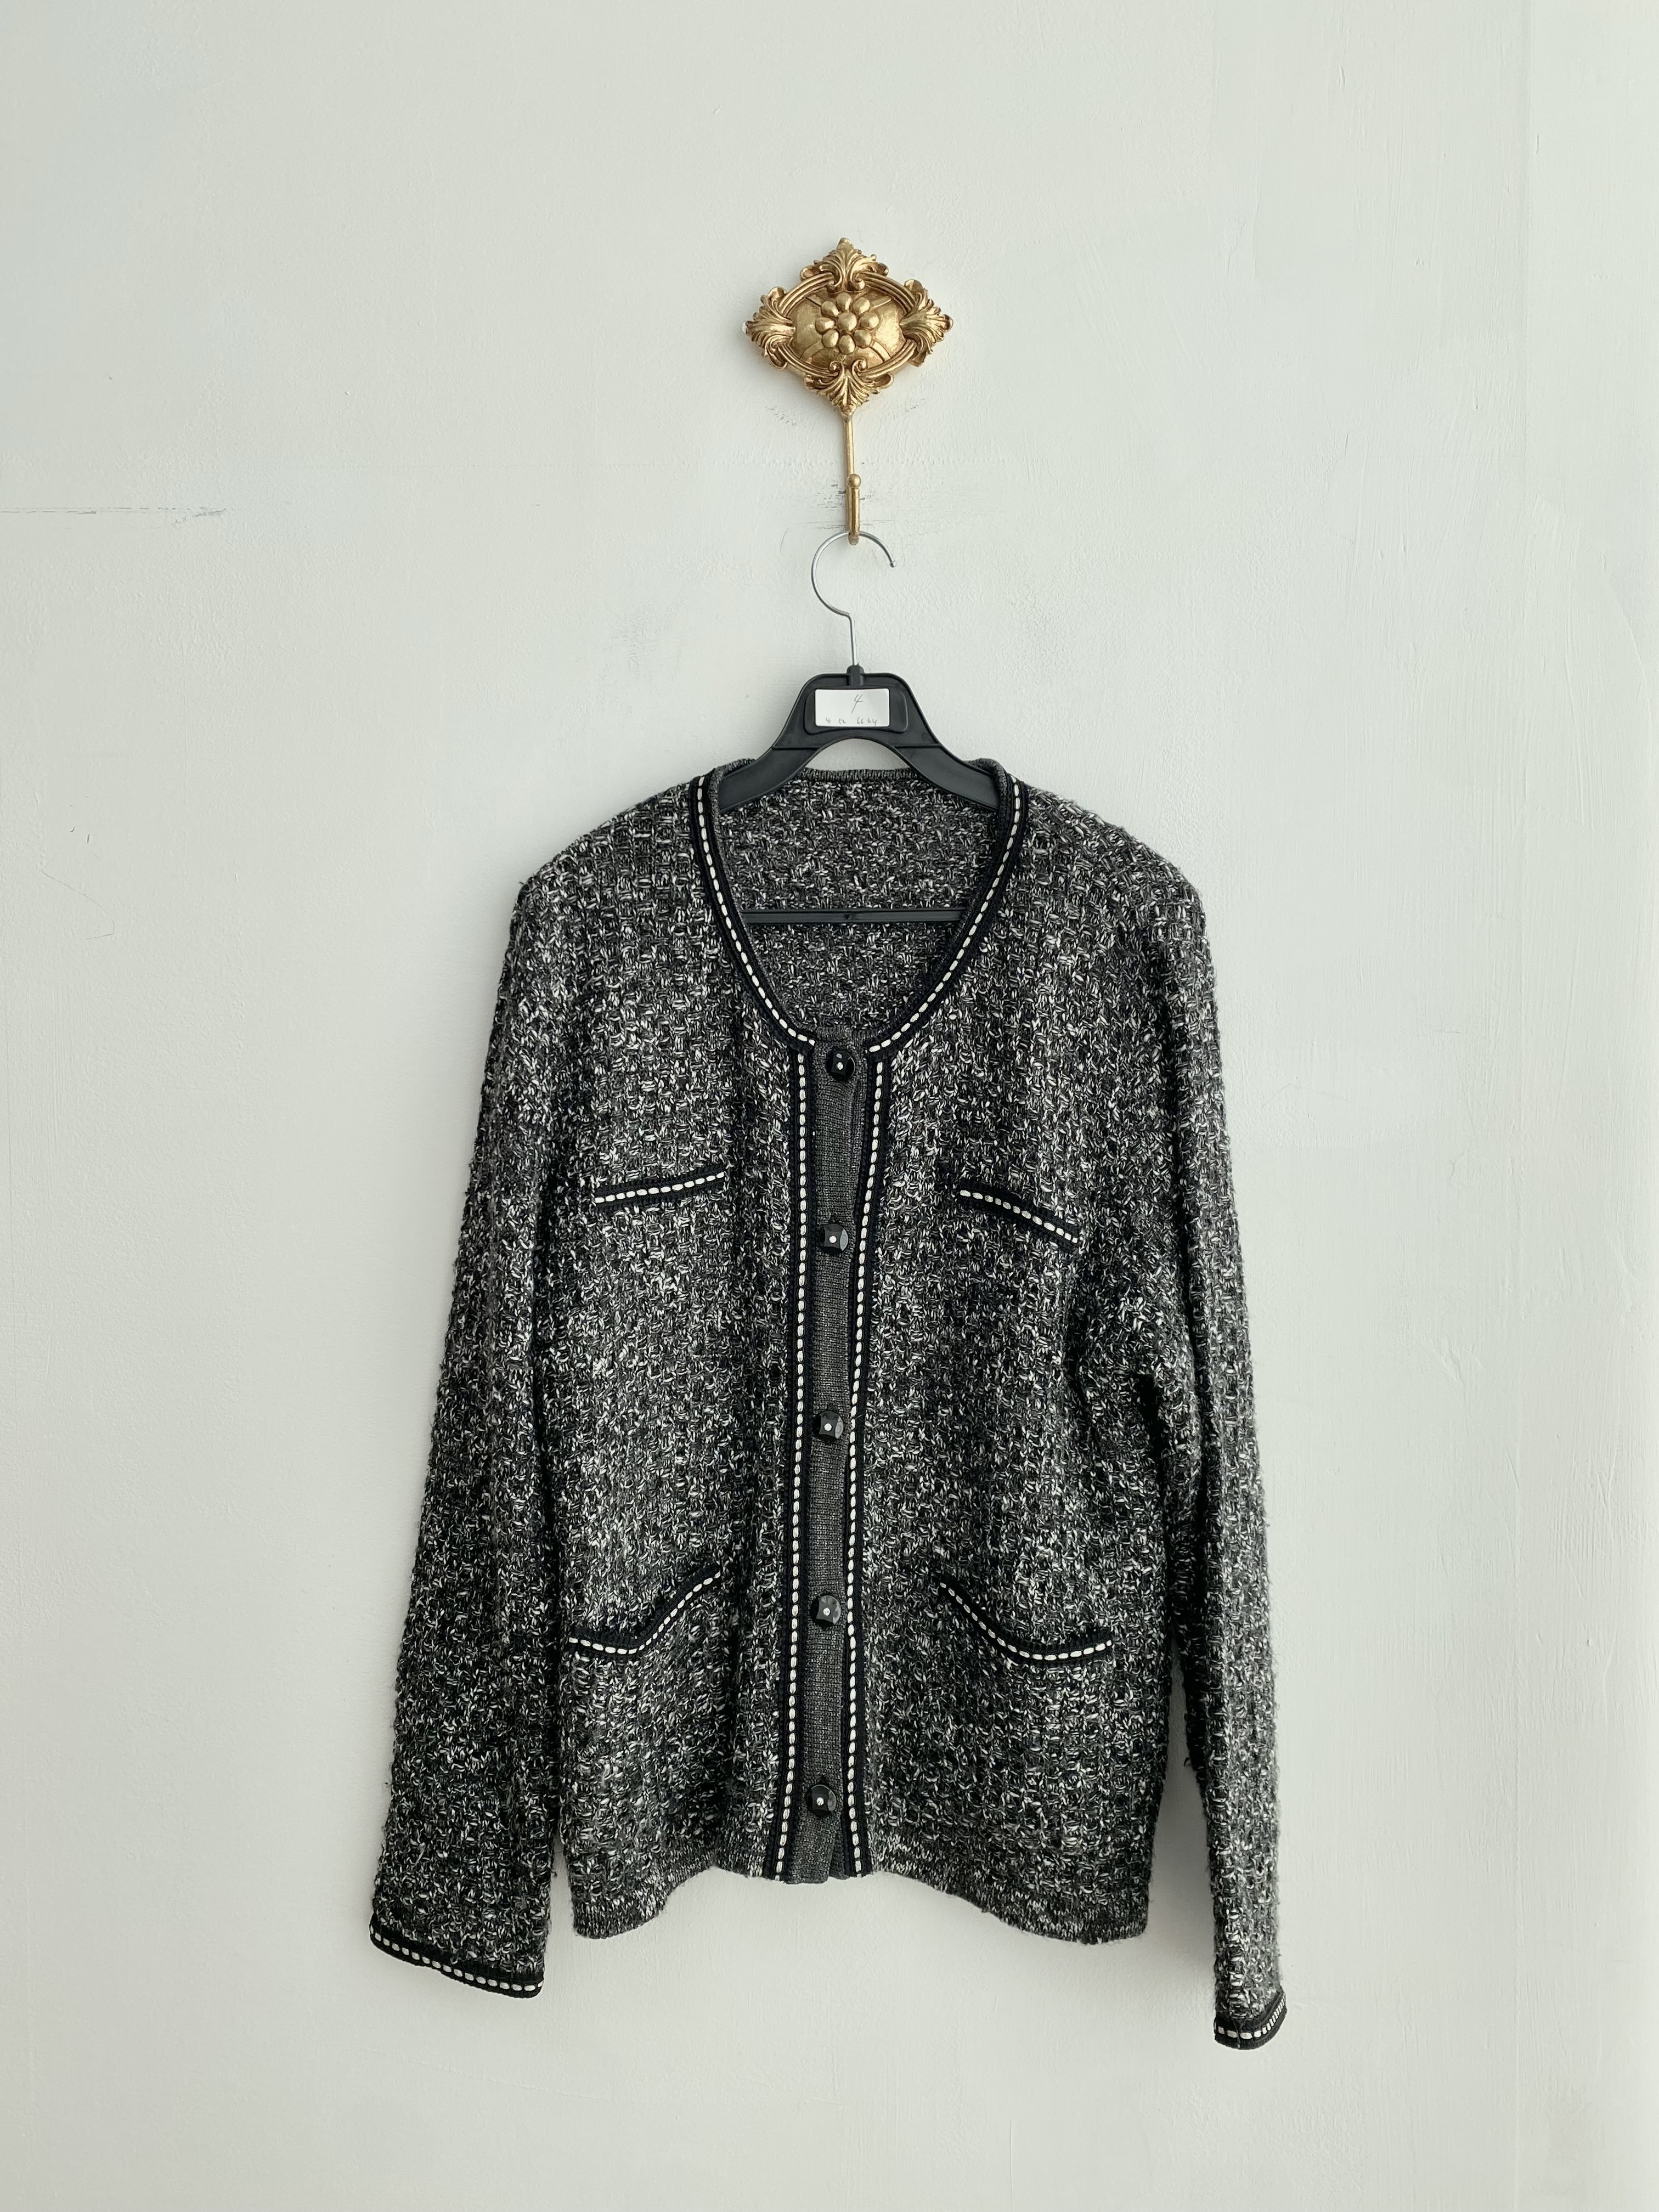 Black charcoal glittery tweed jacket cardigan